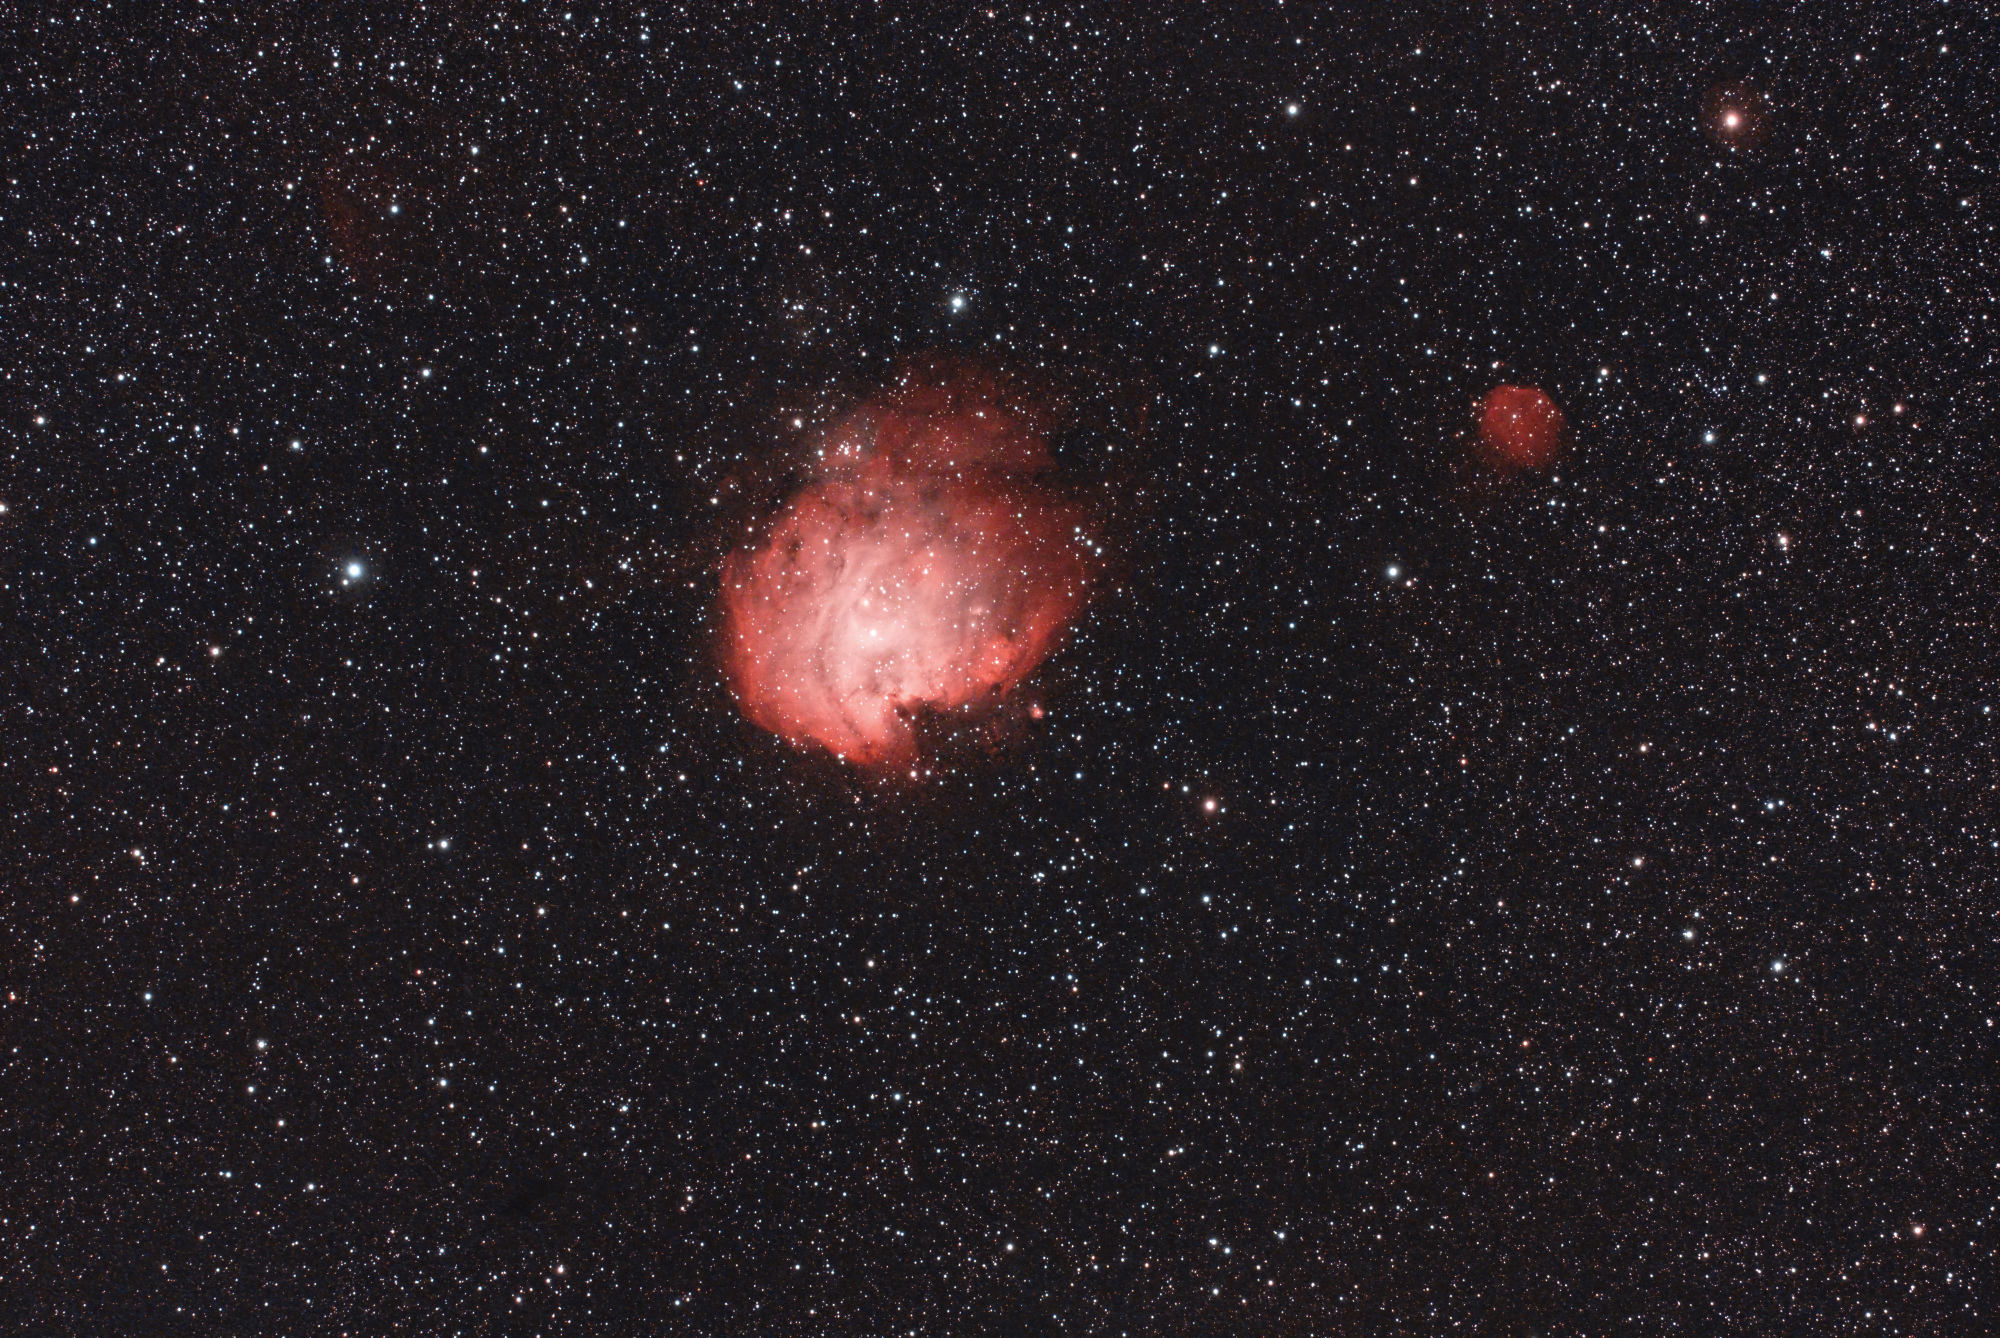 NGC2174-61x180sec-DeNoiseAI-low-light.jpg